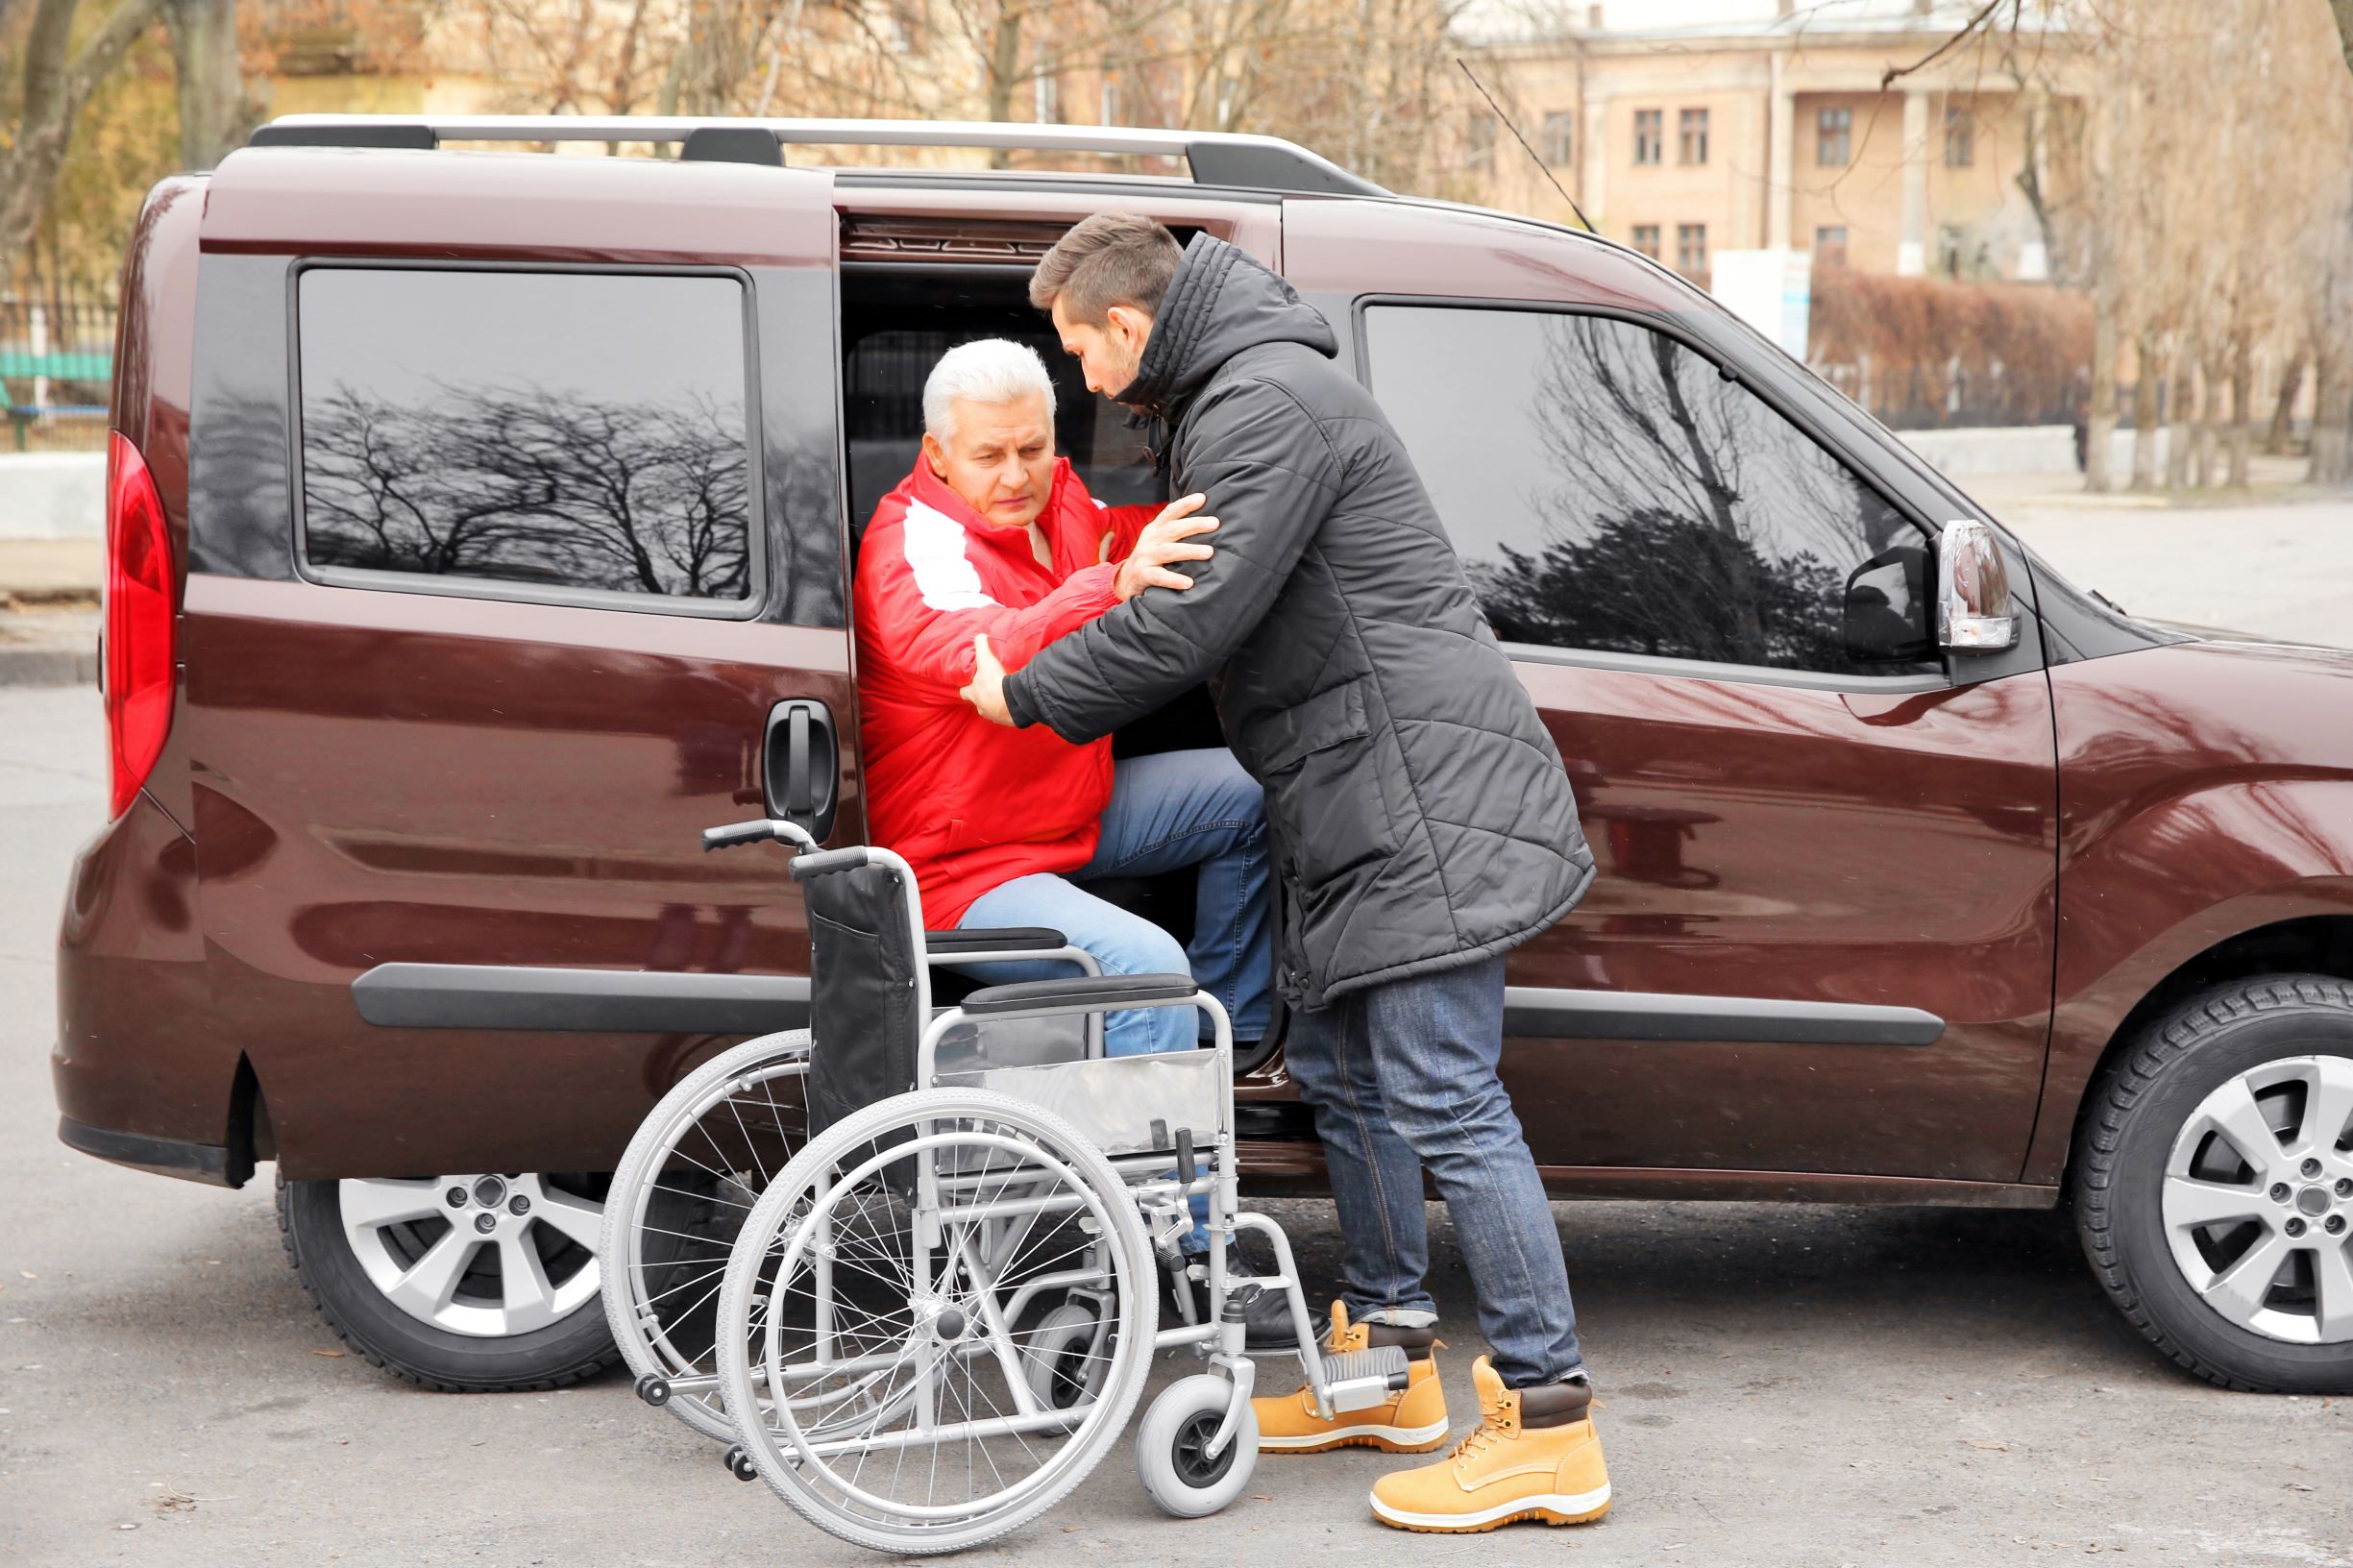 Taskm8 mate helping a man into a wheelchair from a car